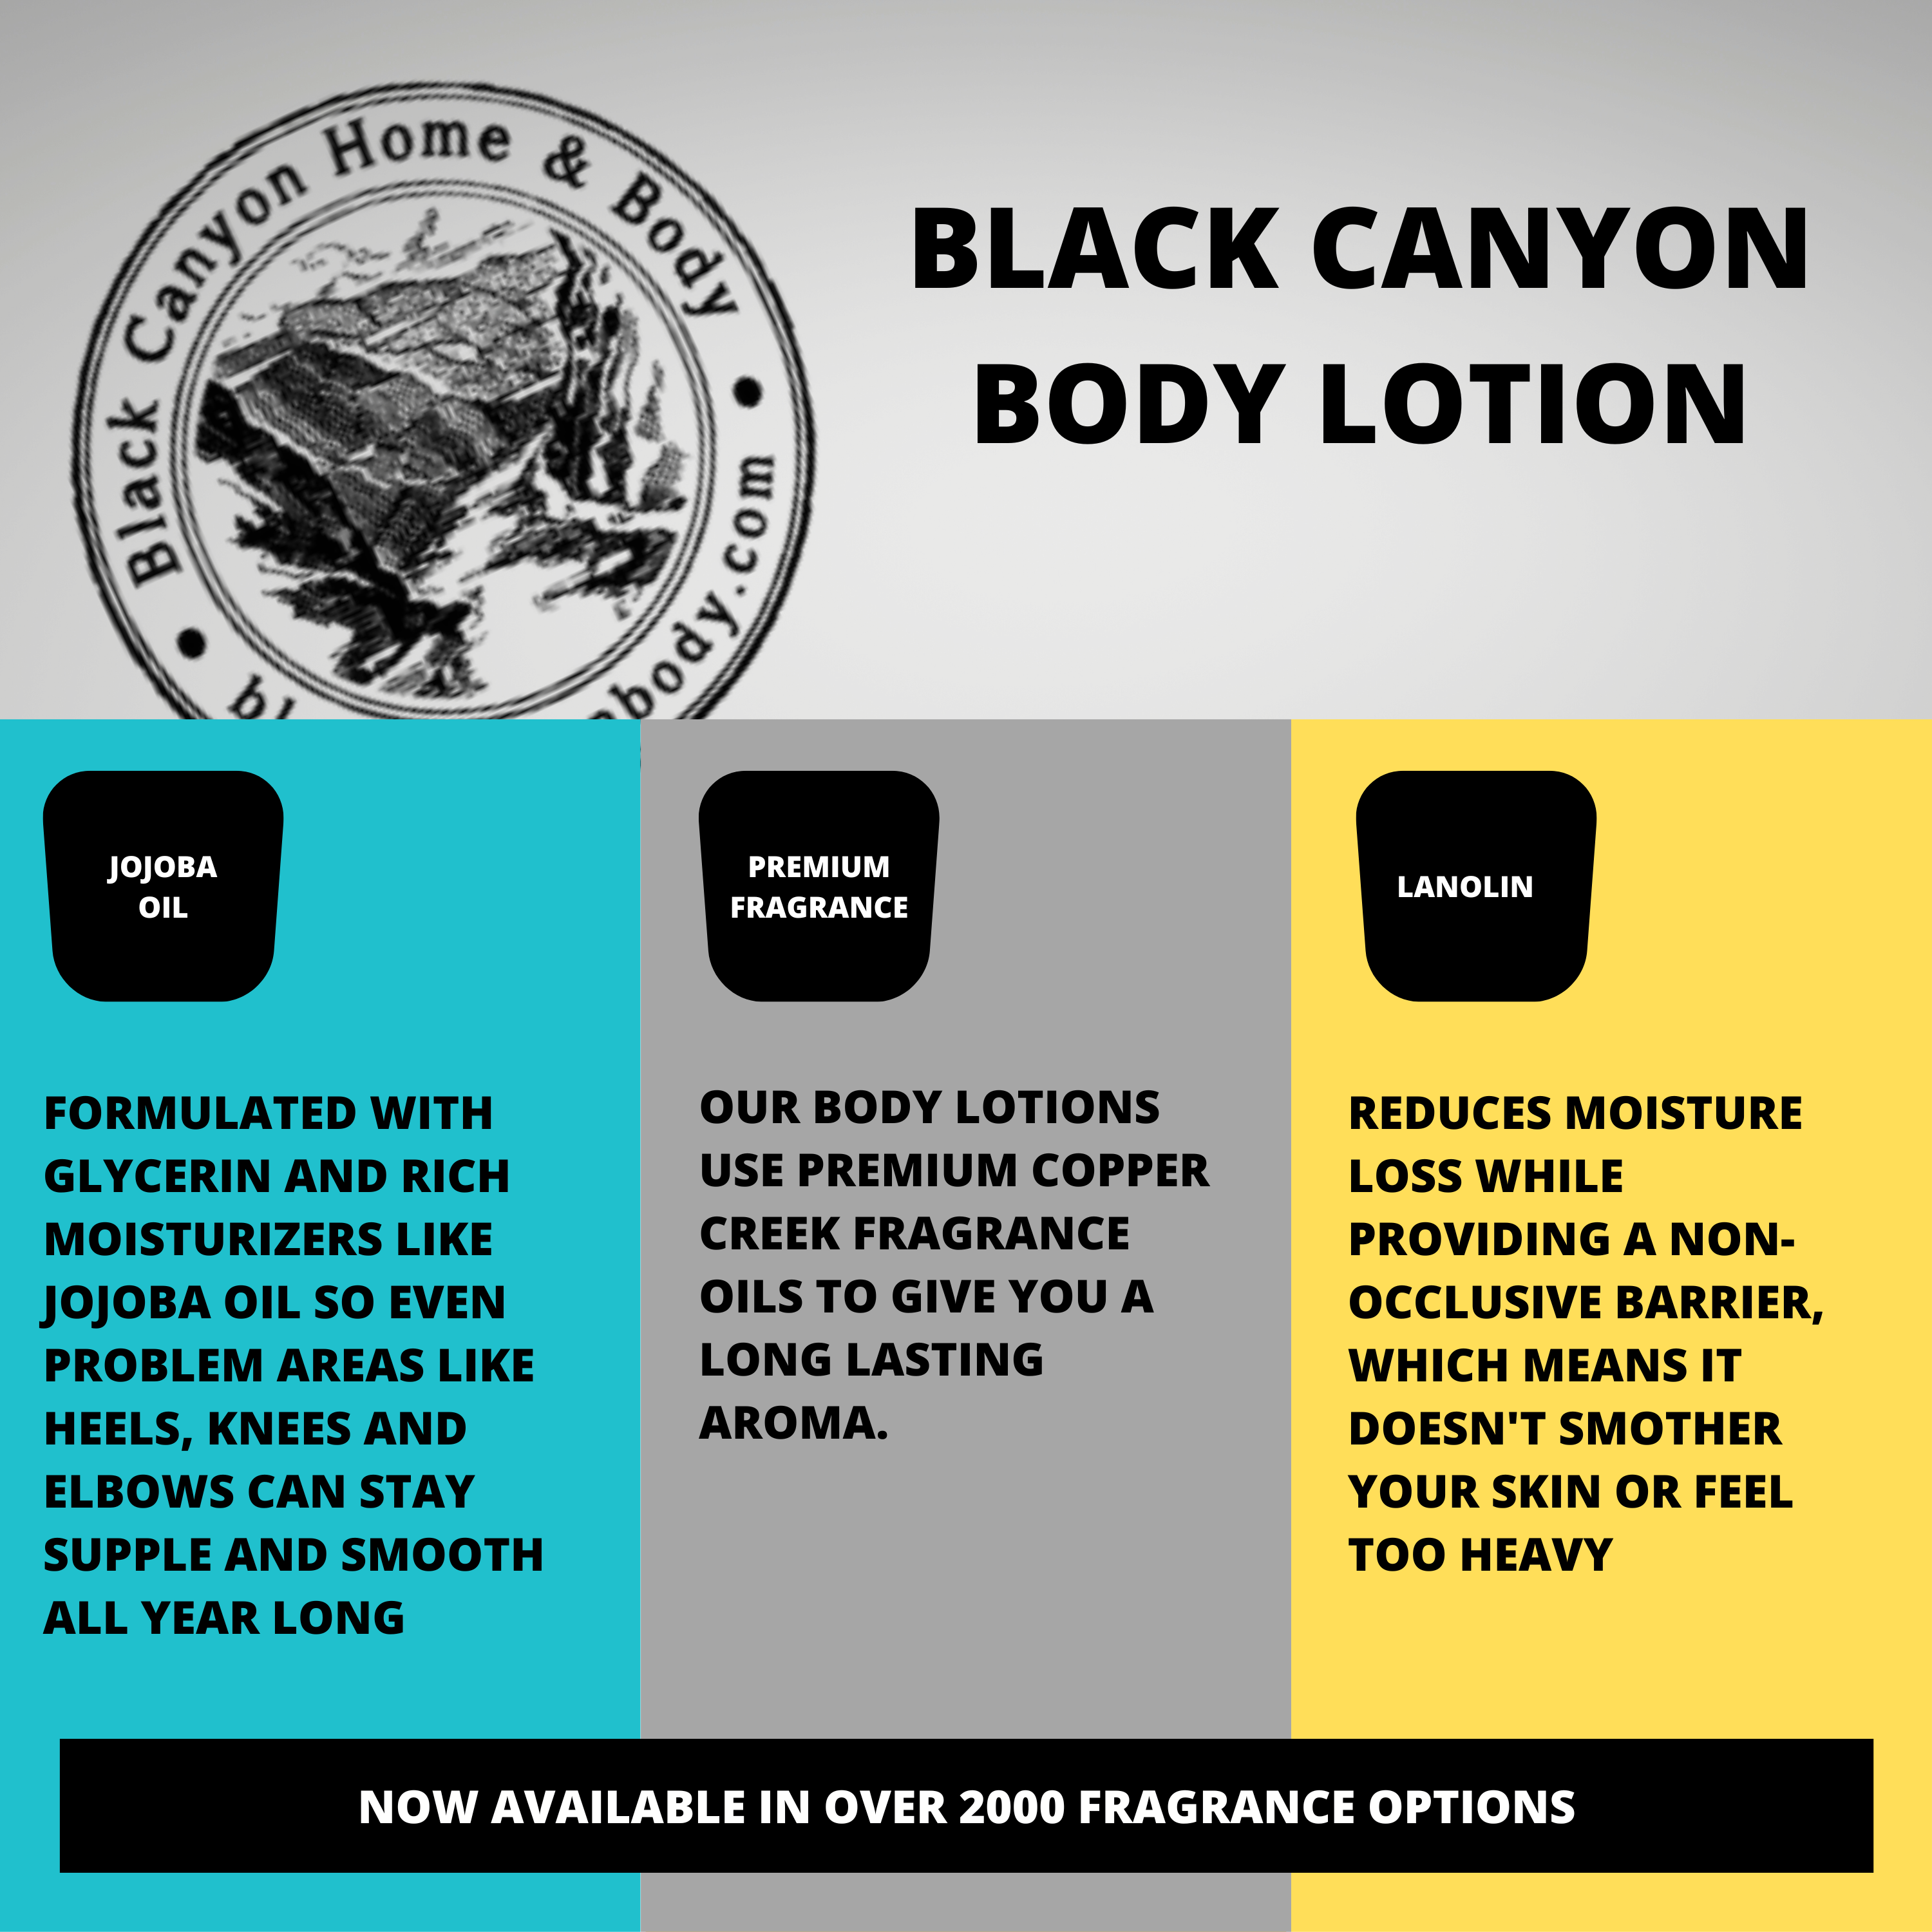 Black Canyon Apothecary Lemon Verbena Scented Luxury Body Lotion with Lanolin and Jojoba Oil